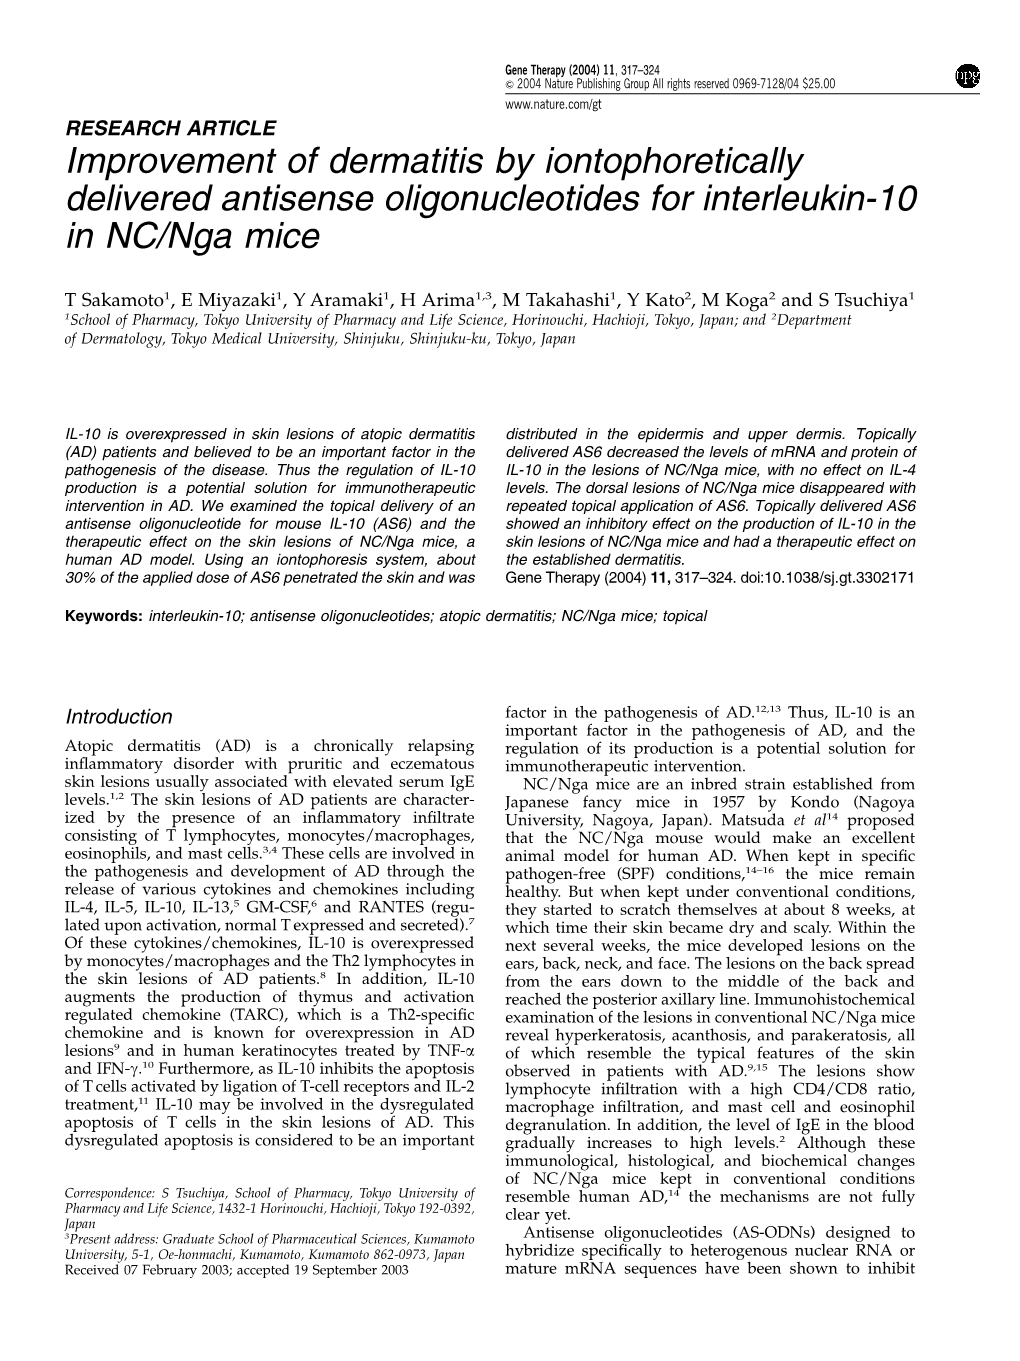 Improvement of Dermatitis by Iontophoretically Delivered Antisense Oligonucleotides for Interleukin-10 in NC/Nga Mice